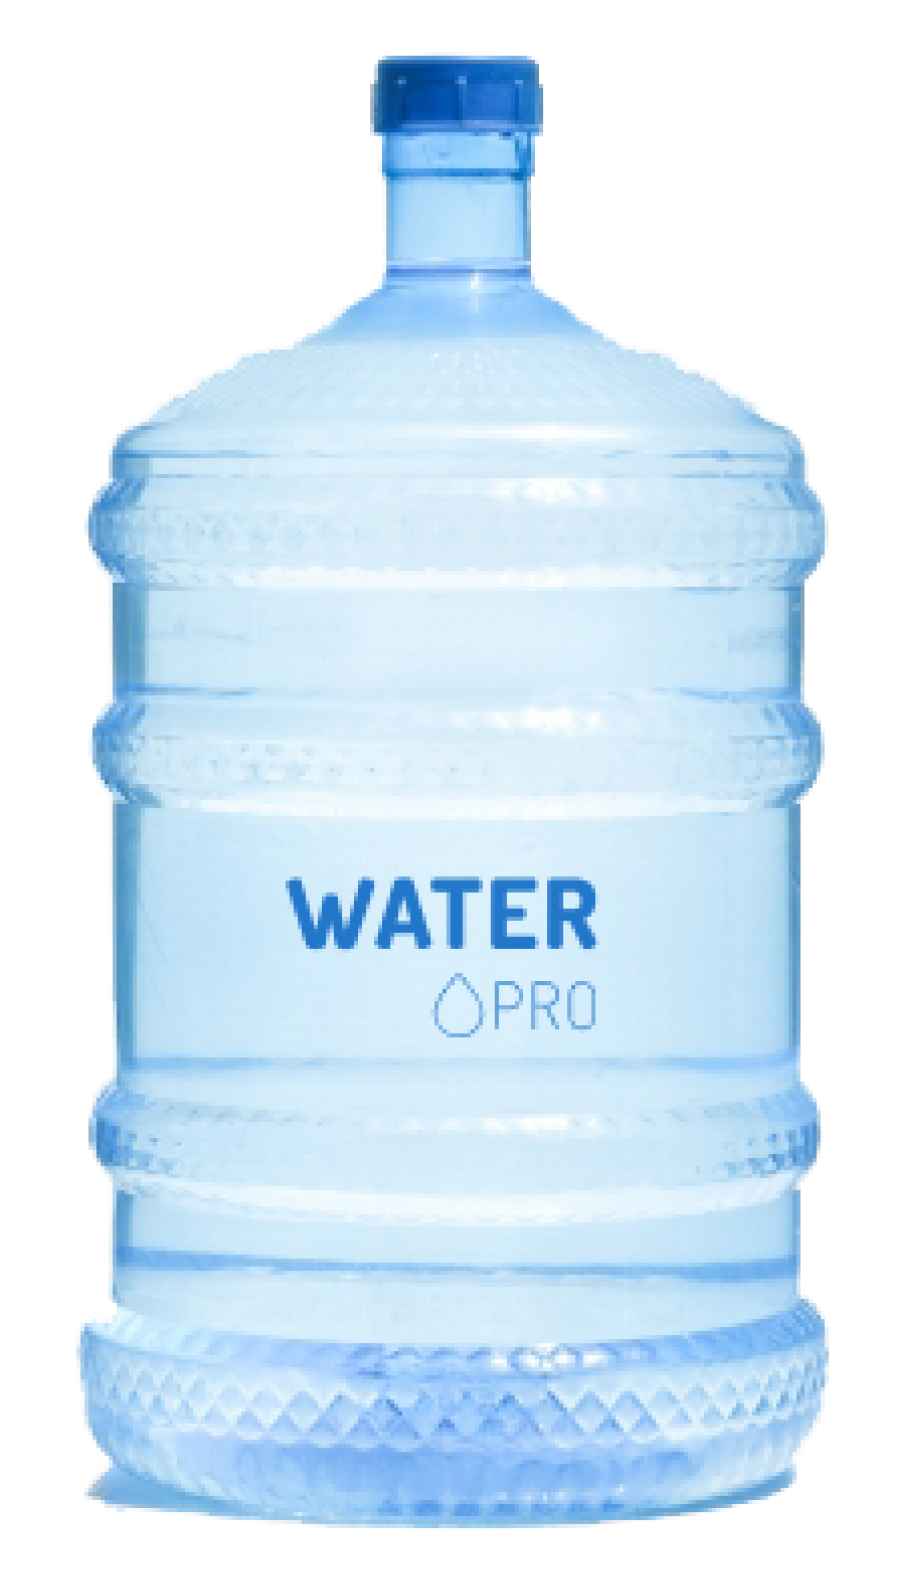 One big bottle of mineral water - Wavio